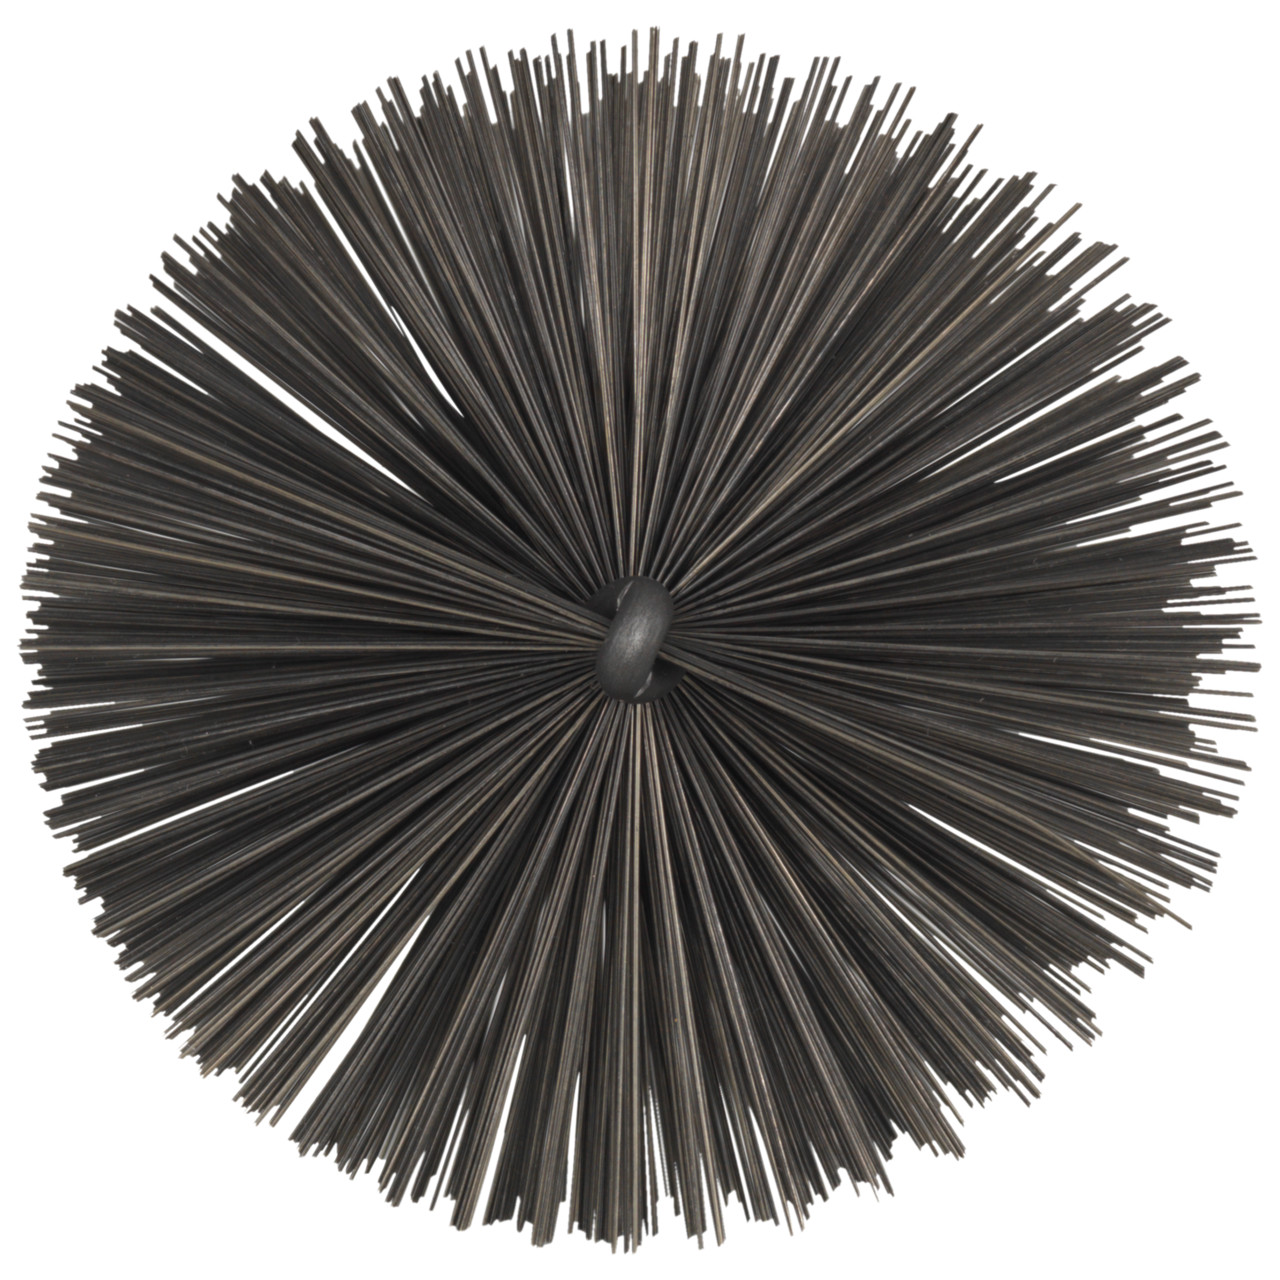 Tyrolit Cepillo para tubos con rosca exterior DxGE-I 63xW1/2-160 Para acero, forma: 18ROGDG - (cepillo para tubos), Art. 34203606